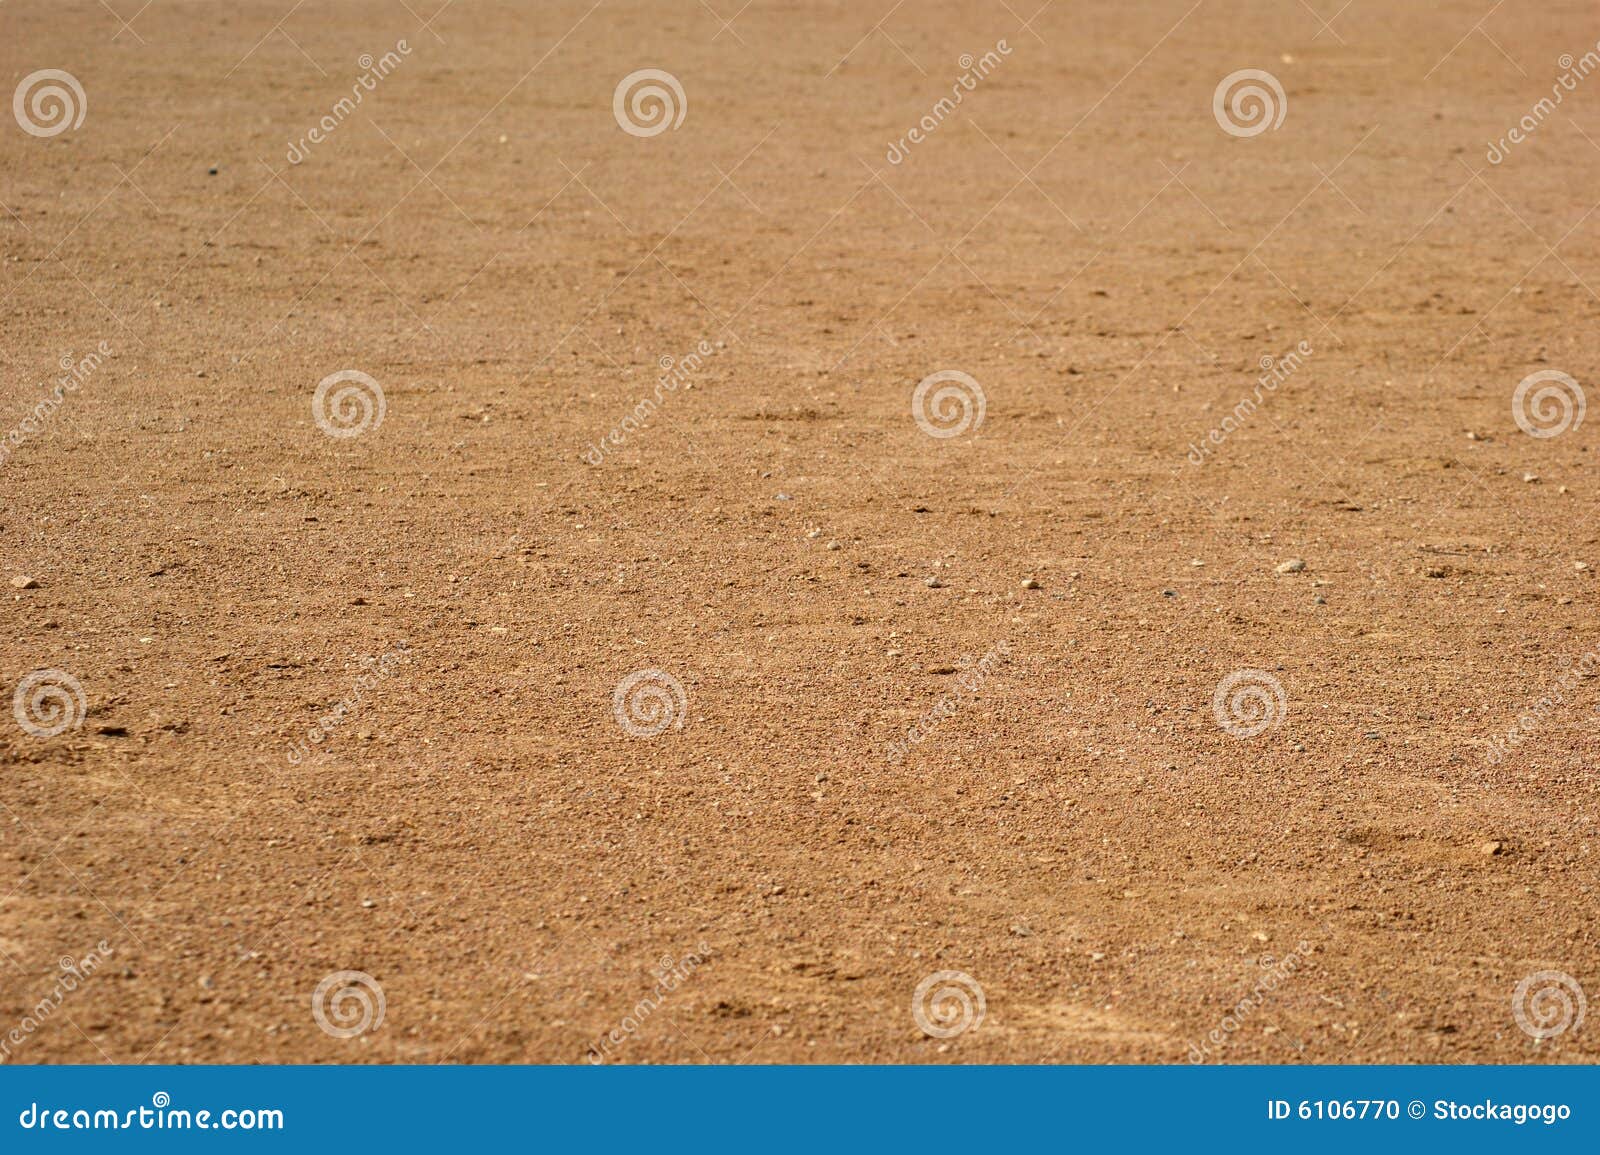 field of dirt